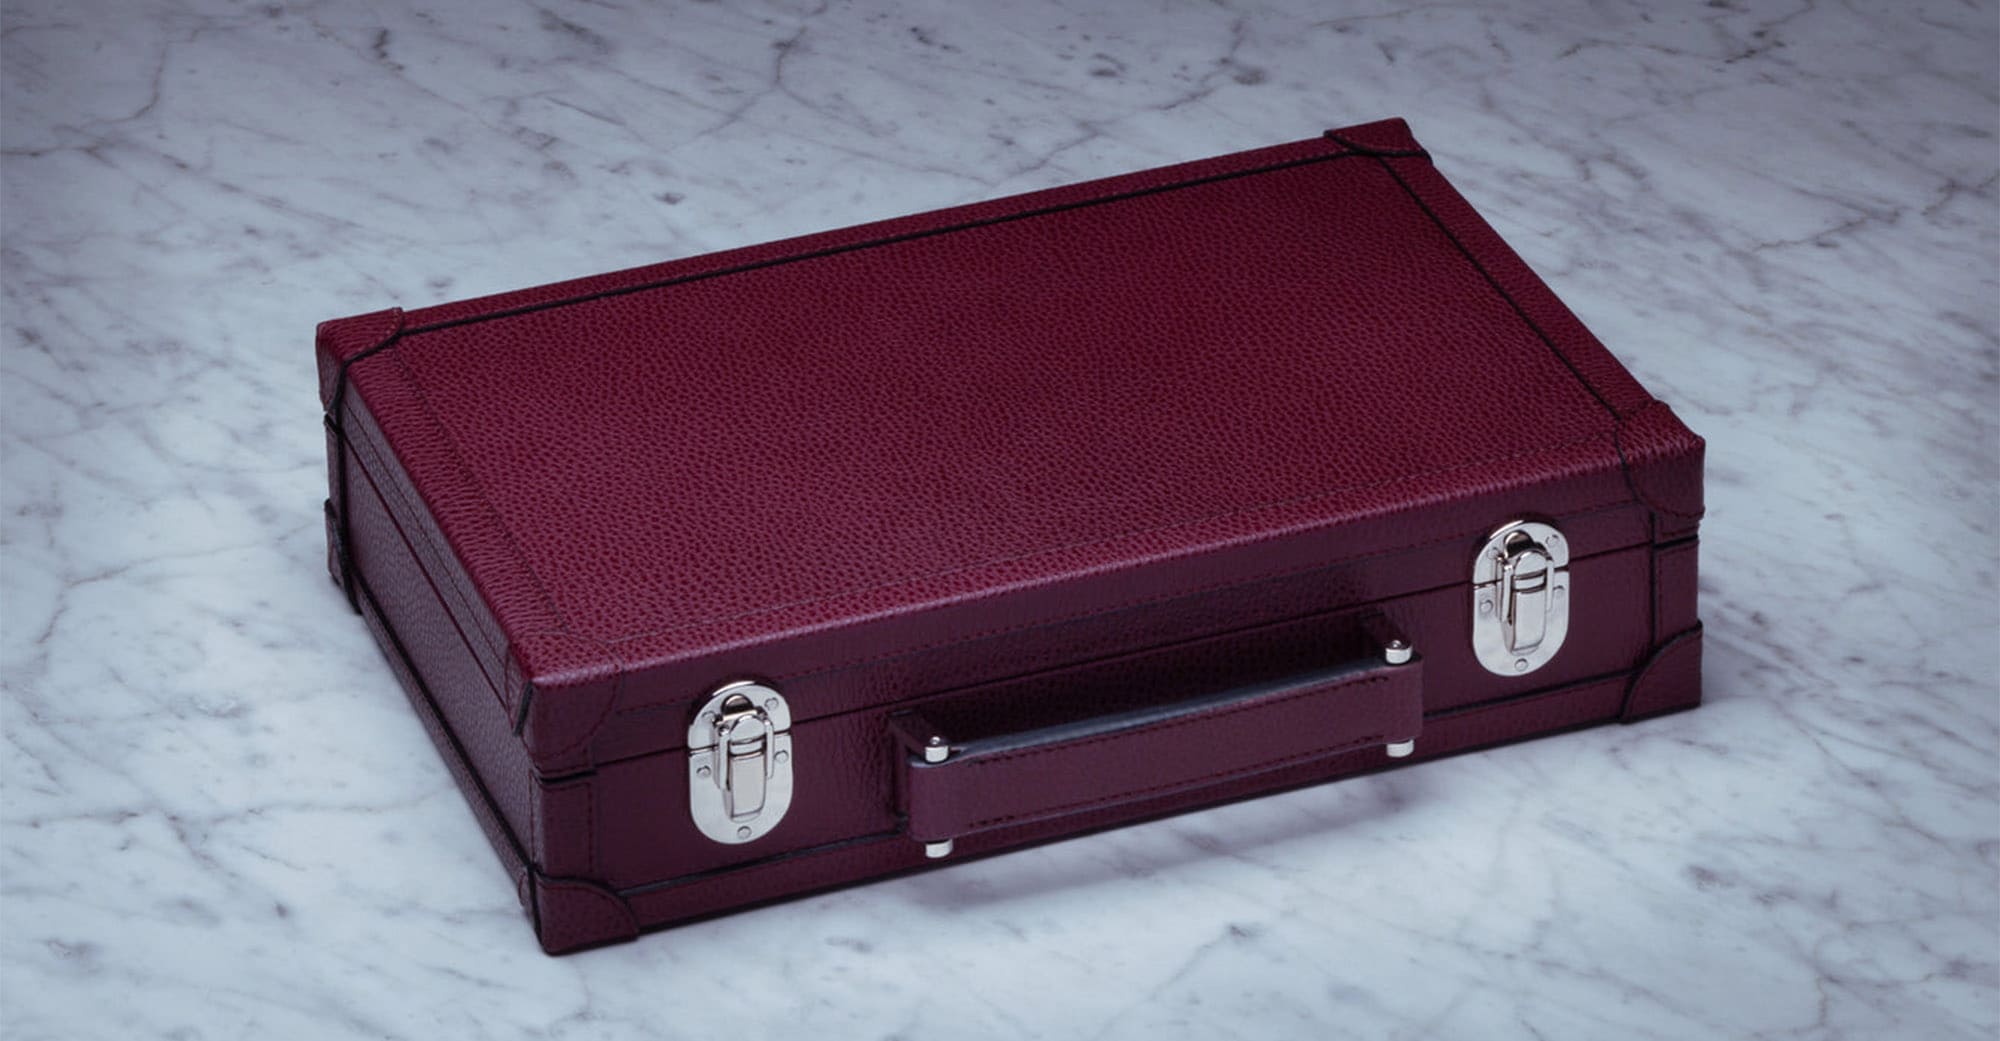 Collector's briefcase